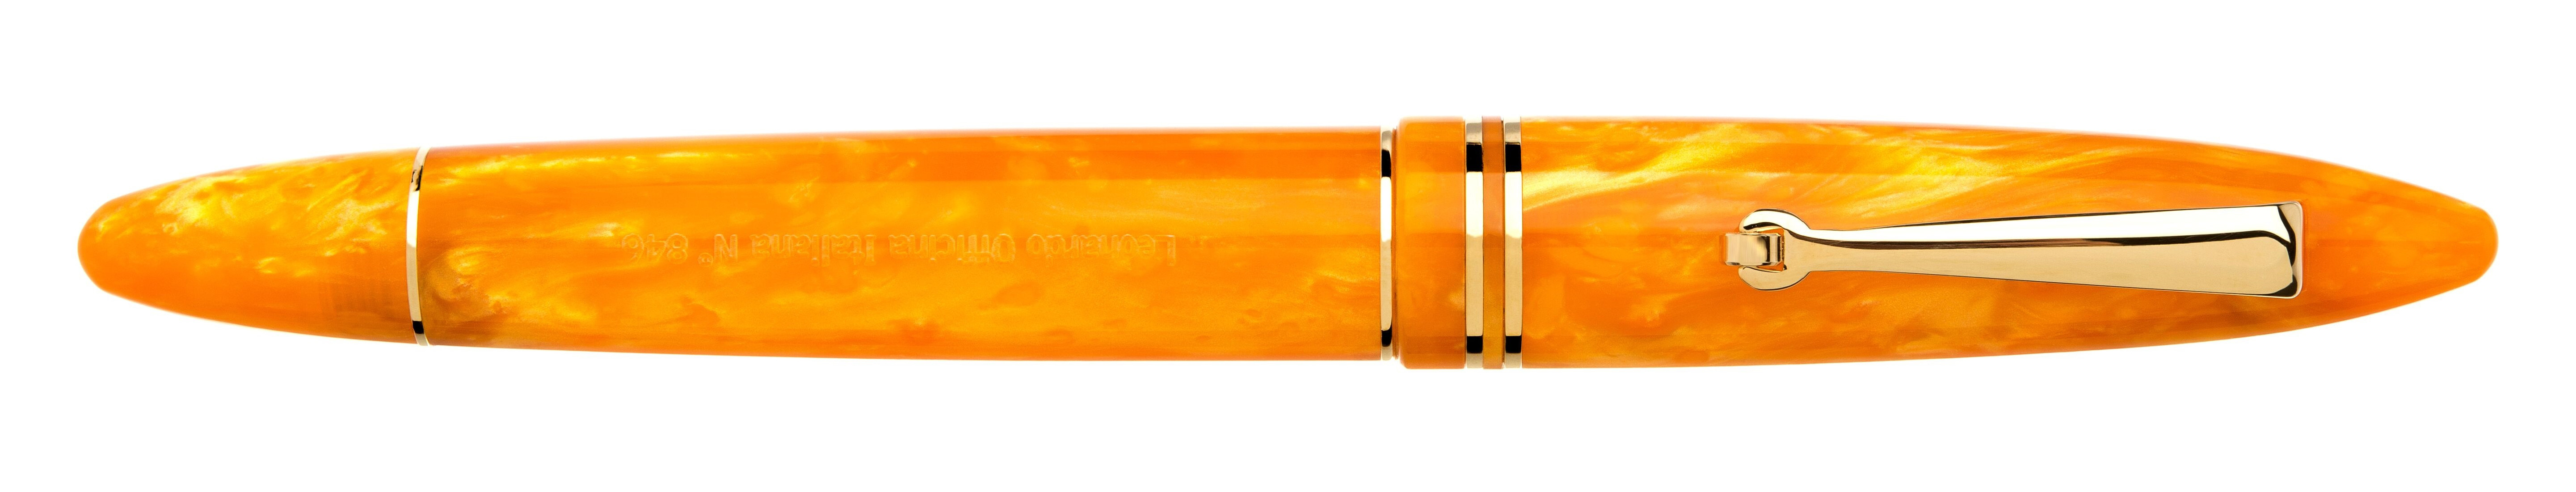 Leonardo Officina Italiana Furore Orange Gold GT Fountain pen